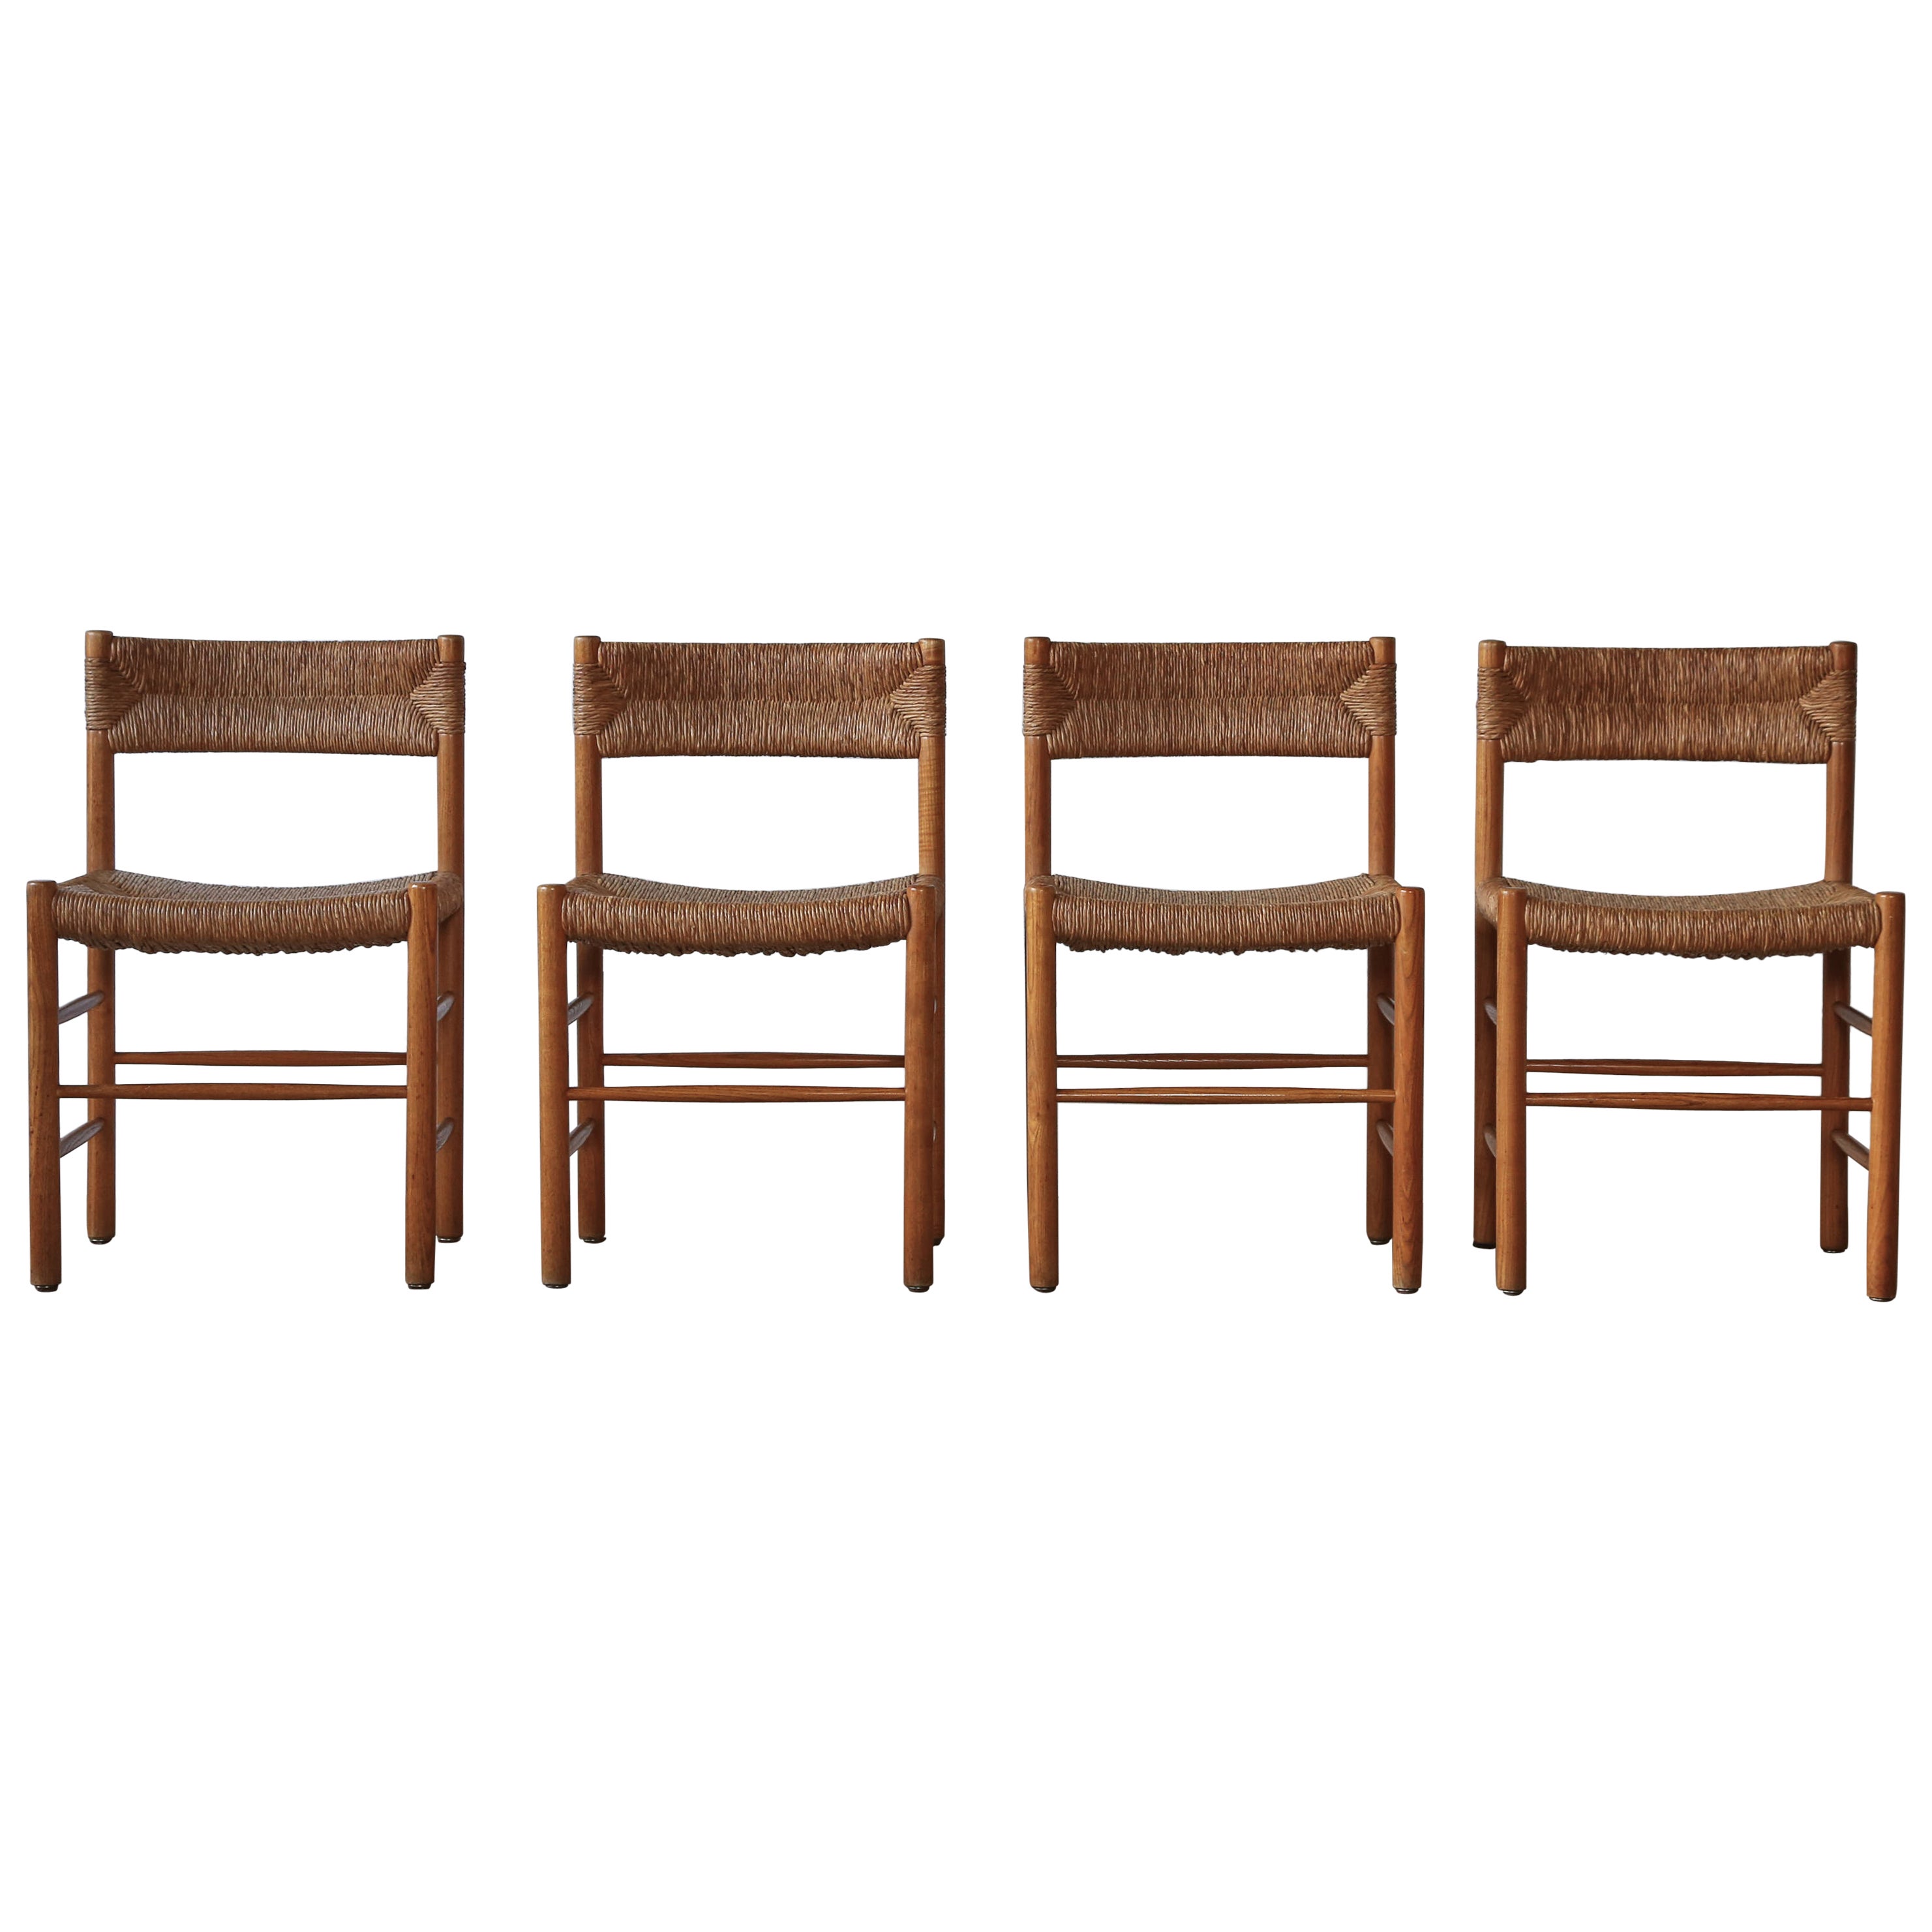 Original Charlotte Perriand / Robert Sentou Dordogne Chairs, France, 1960s